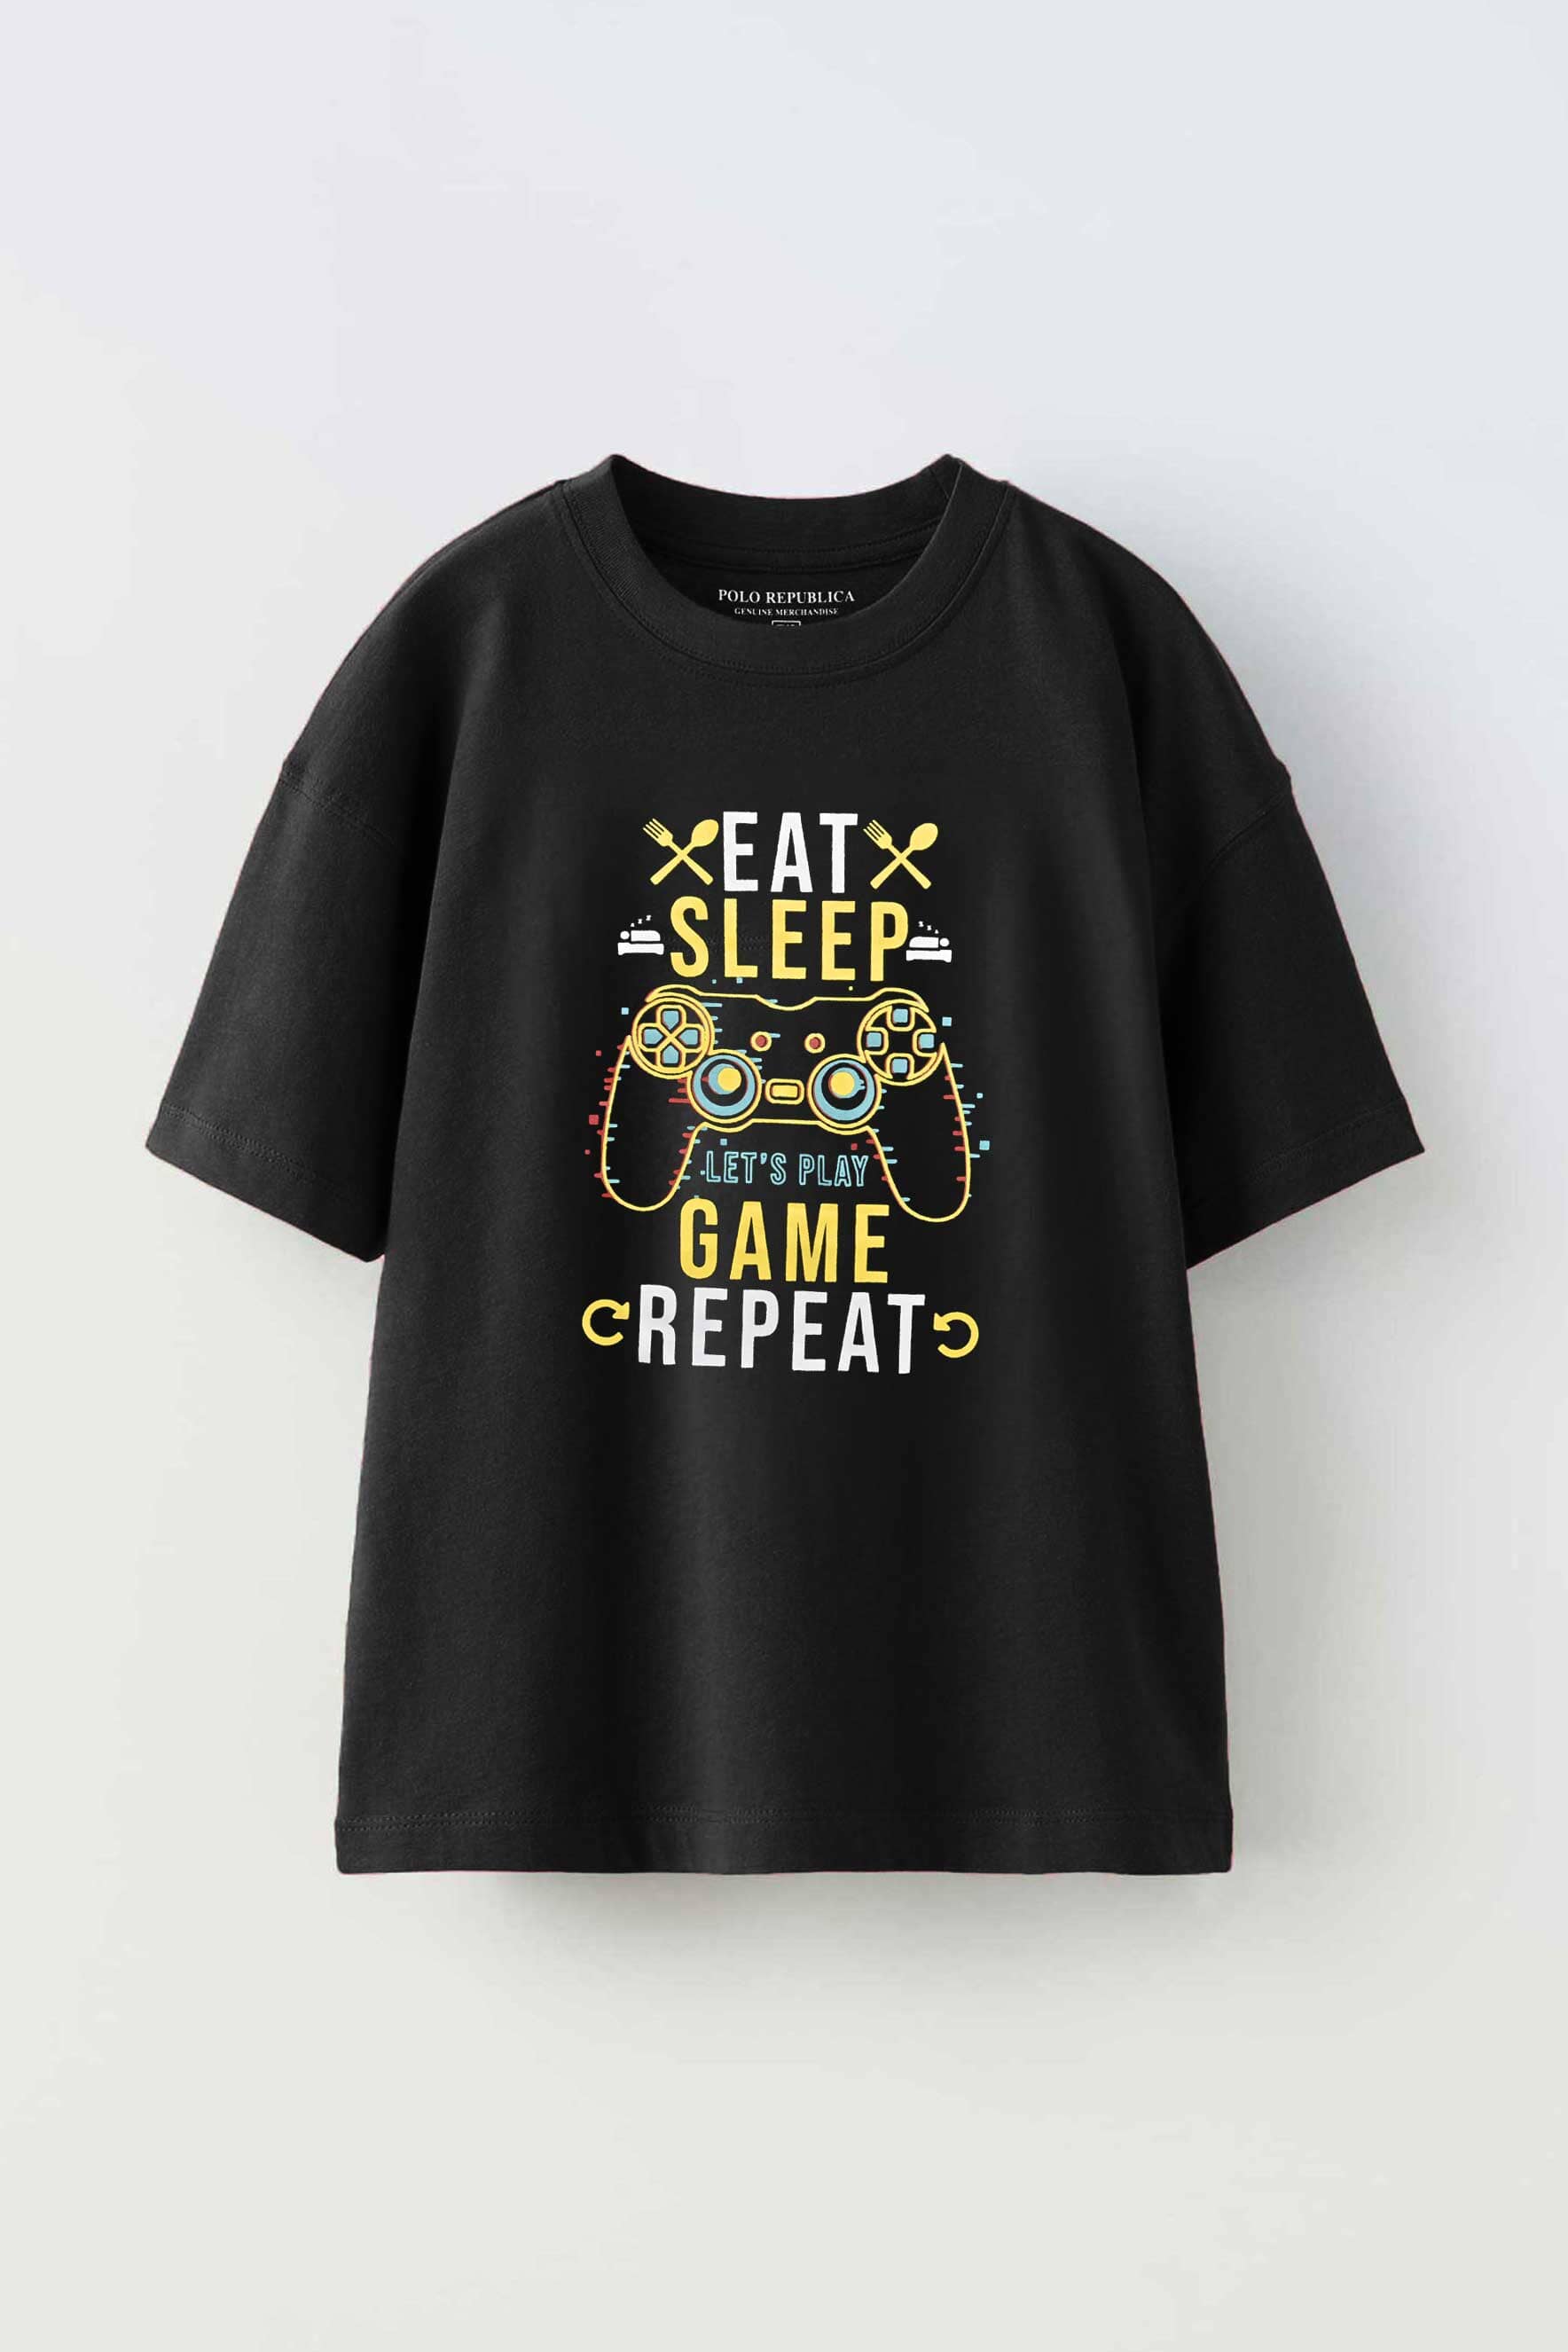 Polo Republica Boy's Eat Sleep Printed Tee Shirt